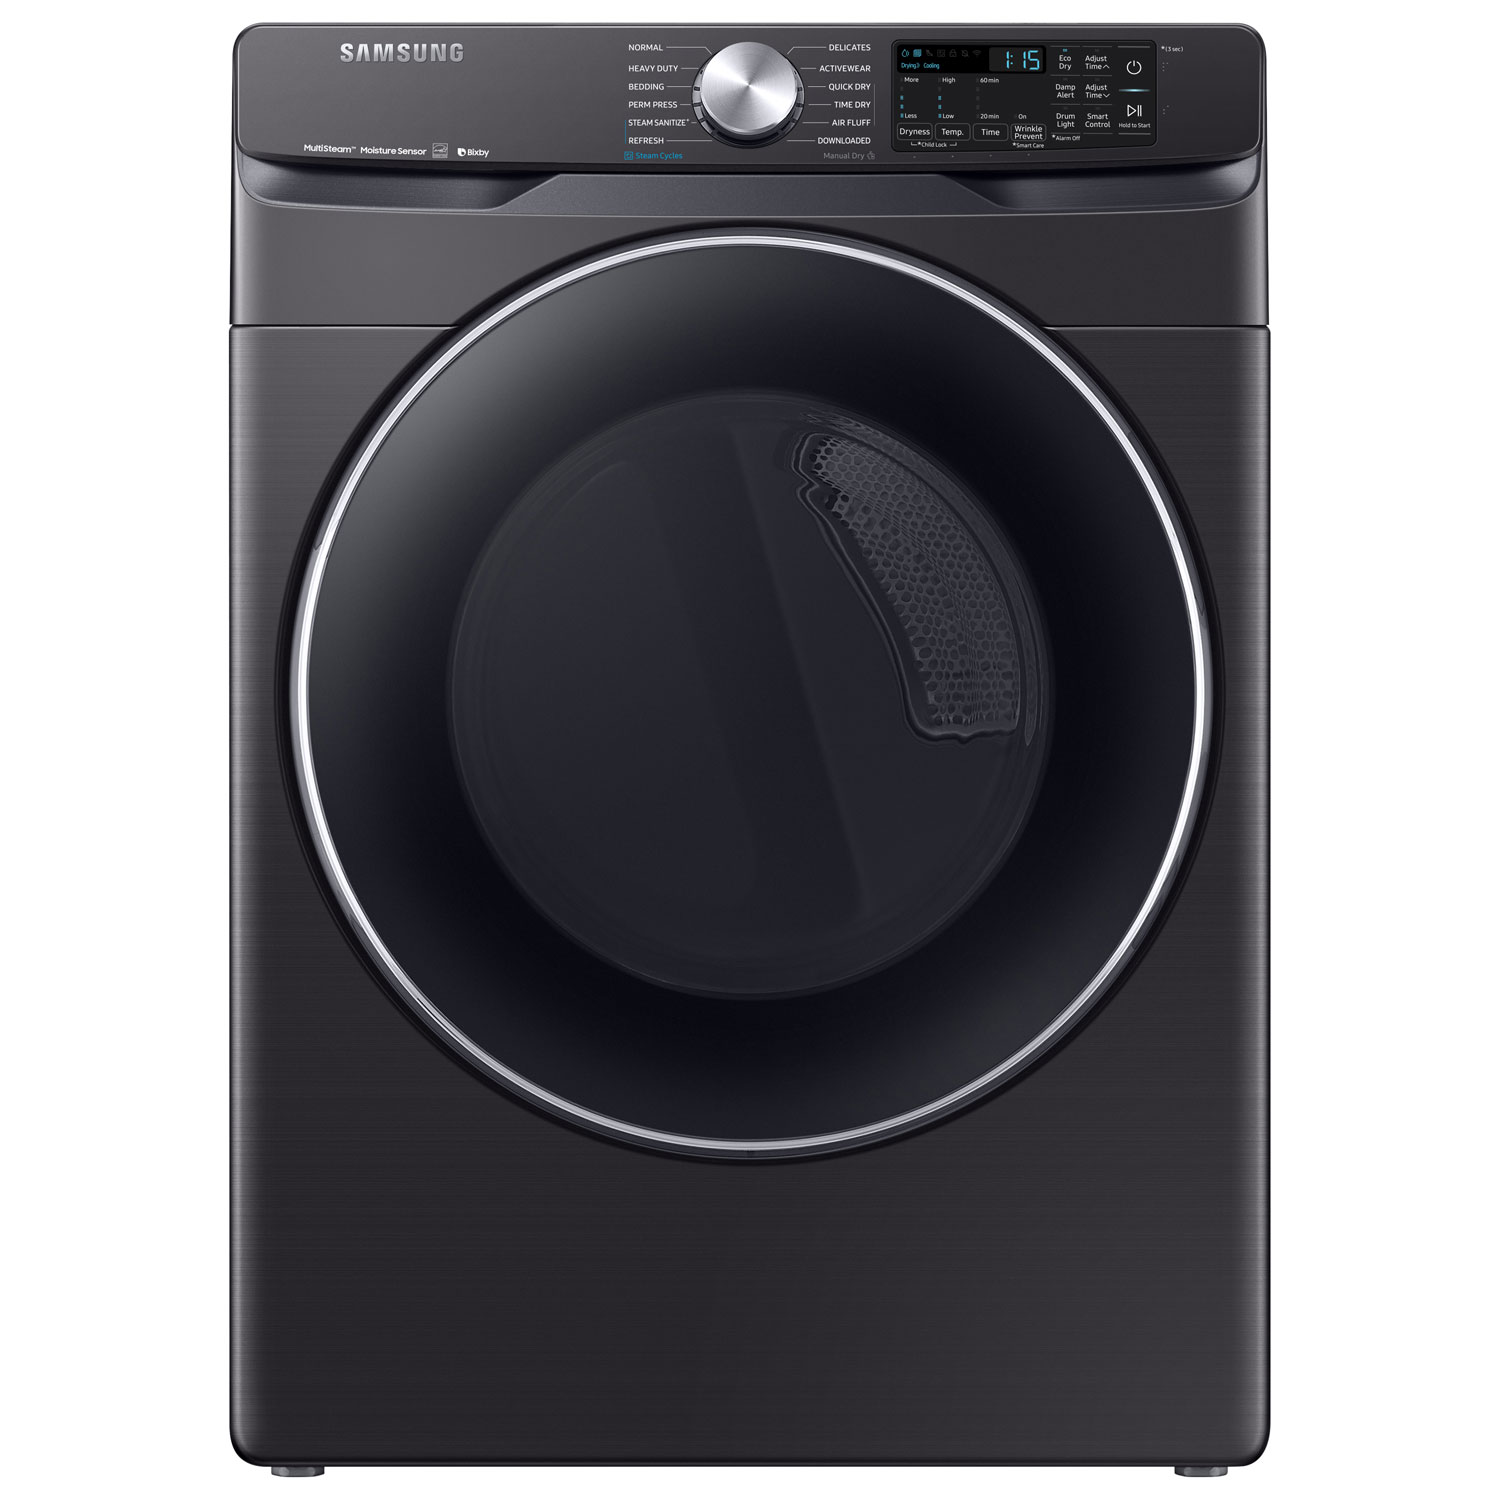 Samsung 7.5 Cu. Ft. Electric Steam Dryer (DVE45R6300V/AC) - Black Stainless